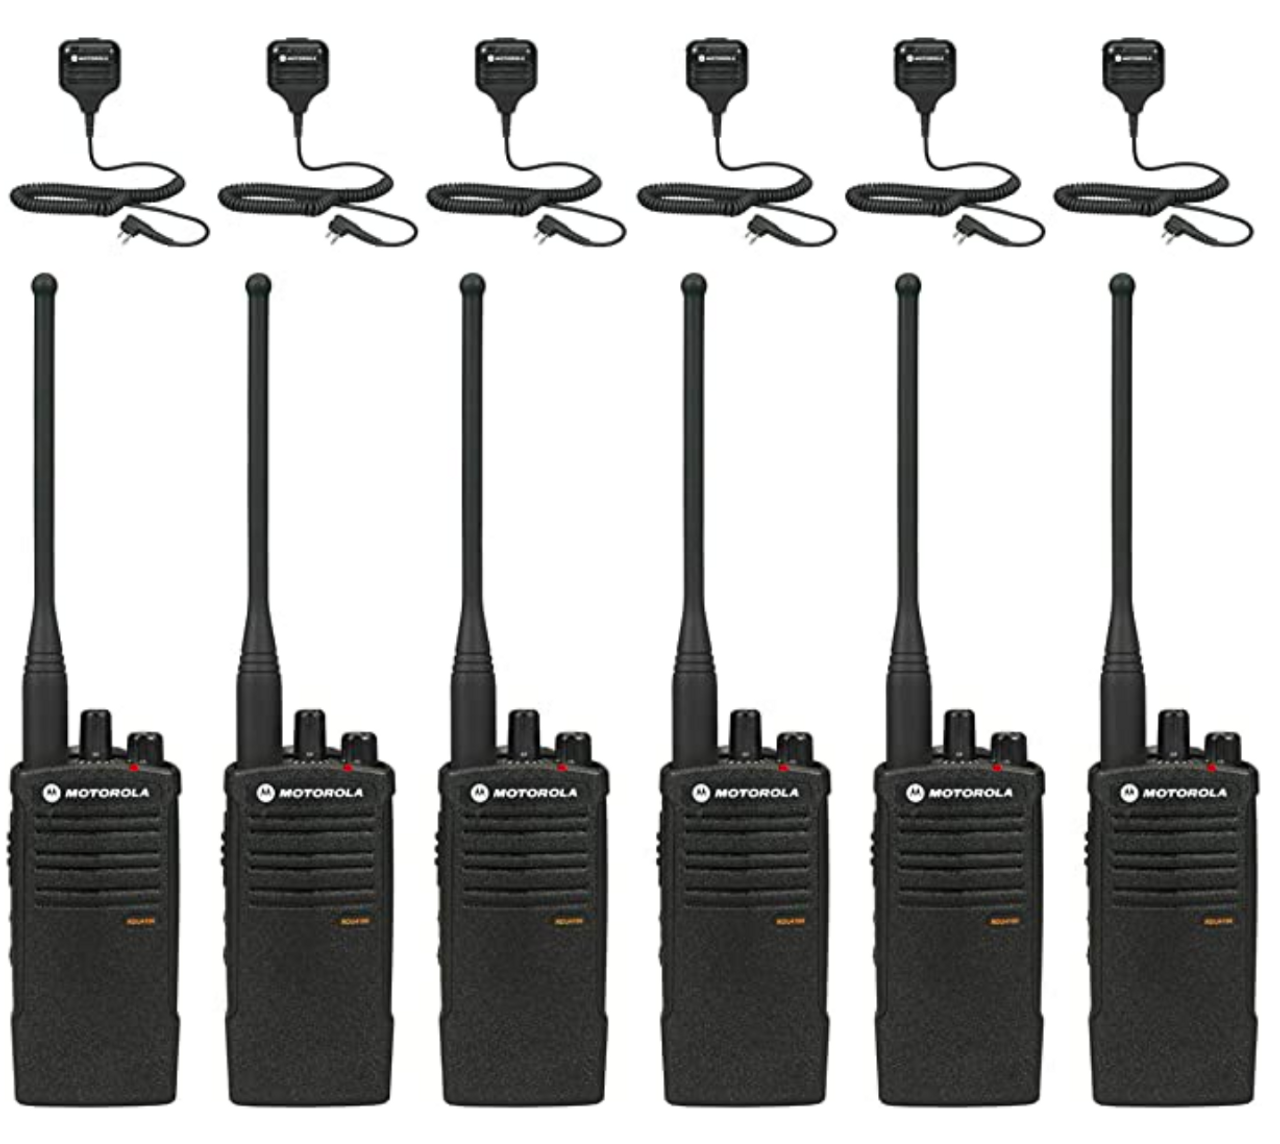 Motorola RDU4100 Business Two Way Radio 6-Pack with Speaker Mics Two-Way  City